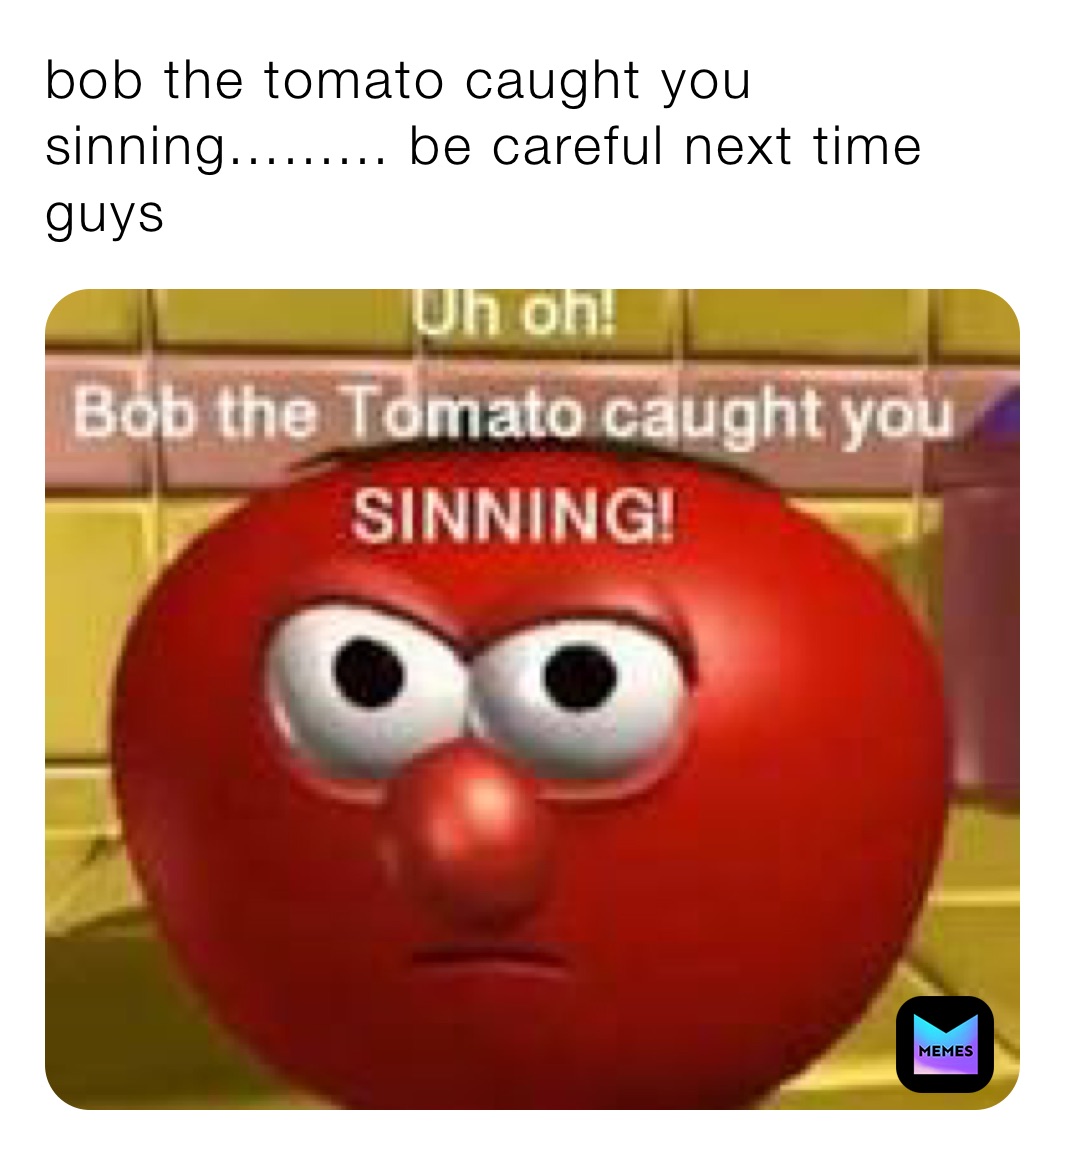 bob the tomato caught you sinning......... be careful next time guys